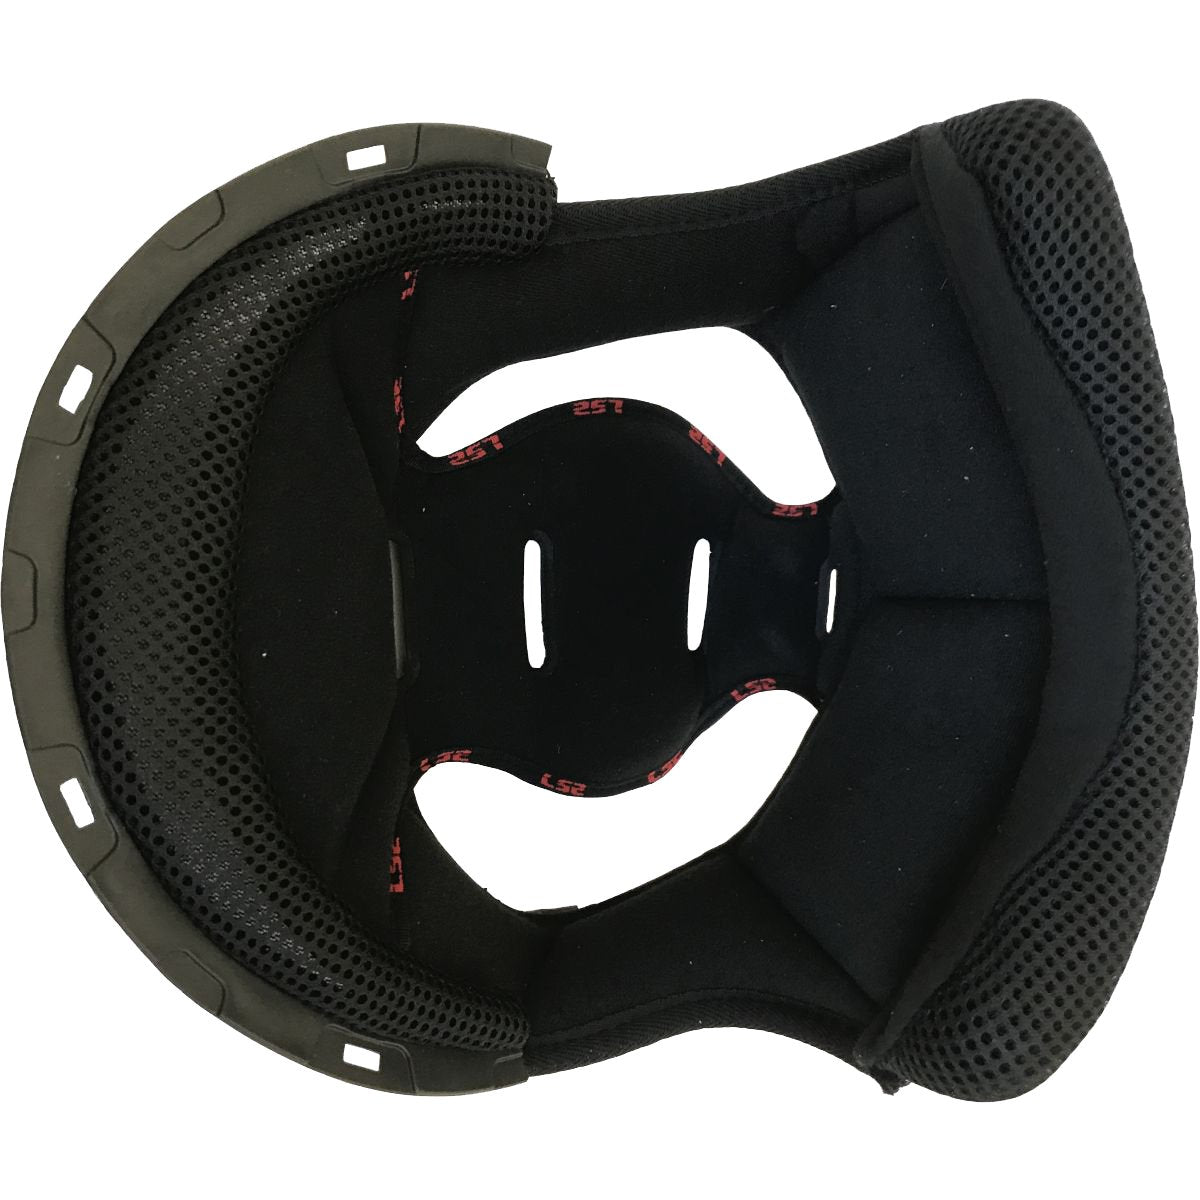 LS2 - Liner for OHM Helmet